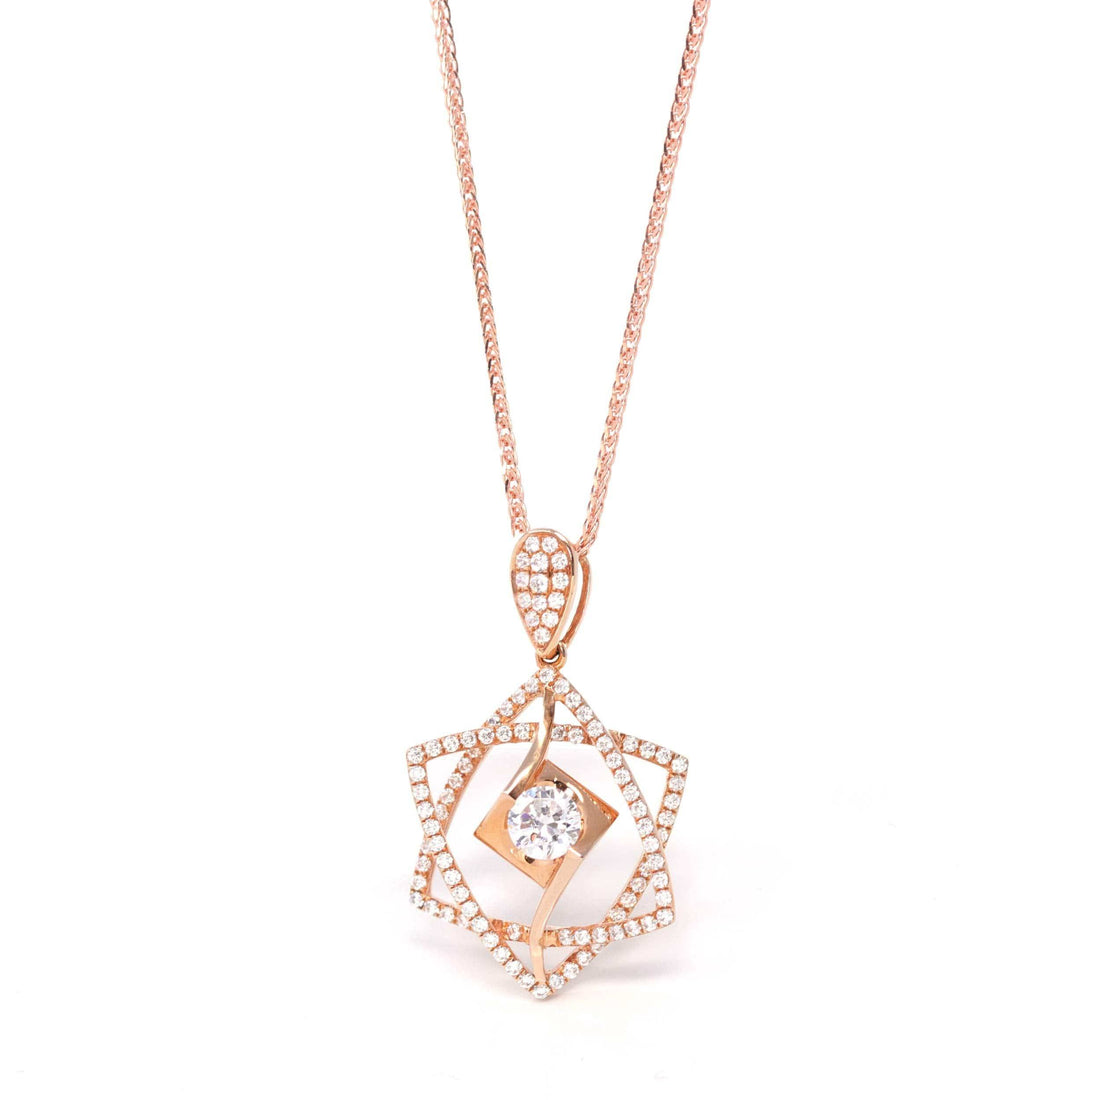 Baikalla Jewelry gemstone jewelry Pendant Only 18k Rose Gold Star Necklace with CZ